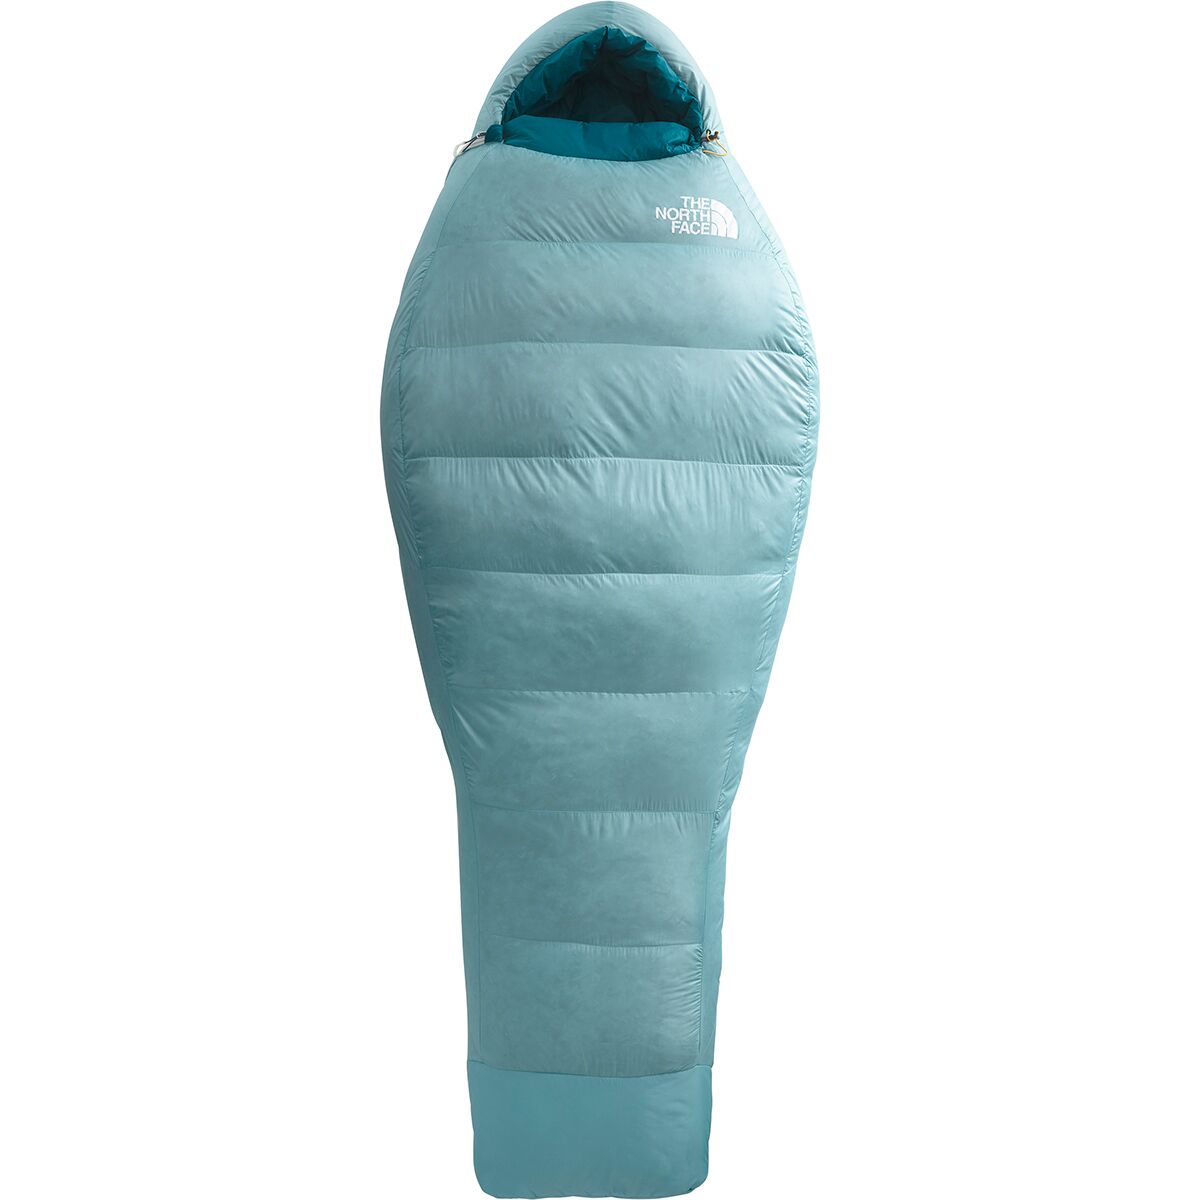 The North Face Trail Lite Sleeping Bag: 20F Down - Women's